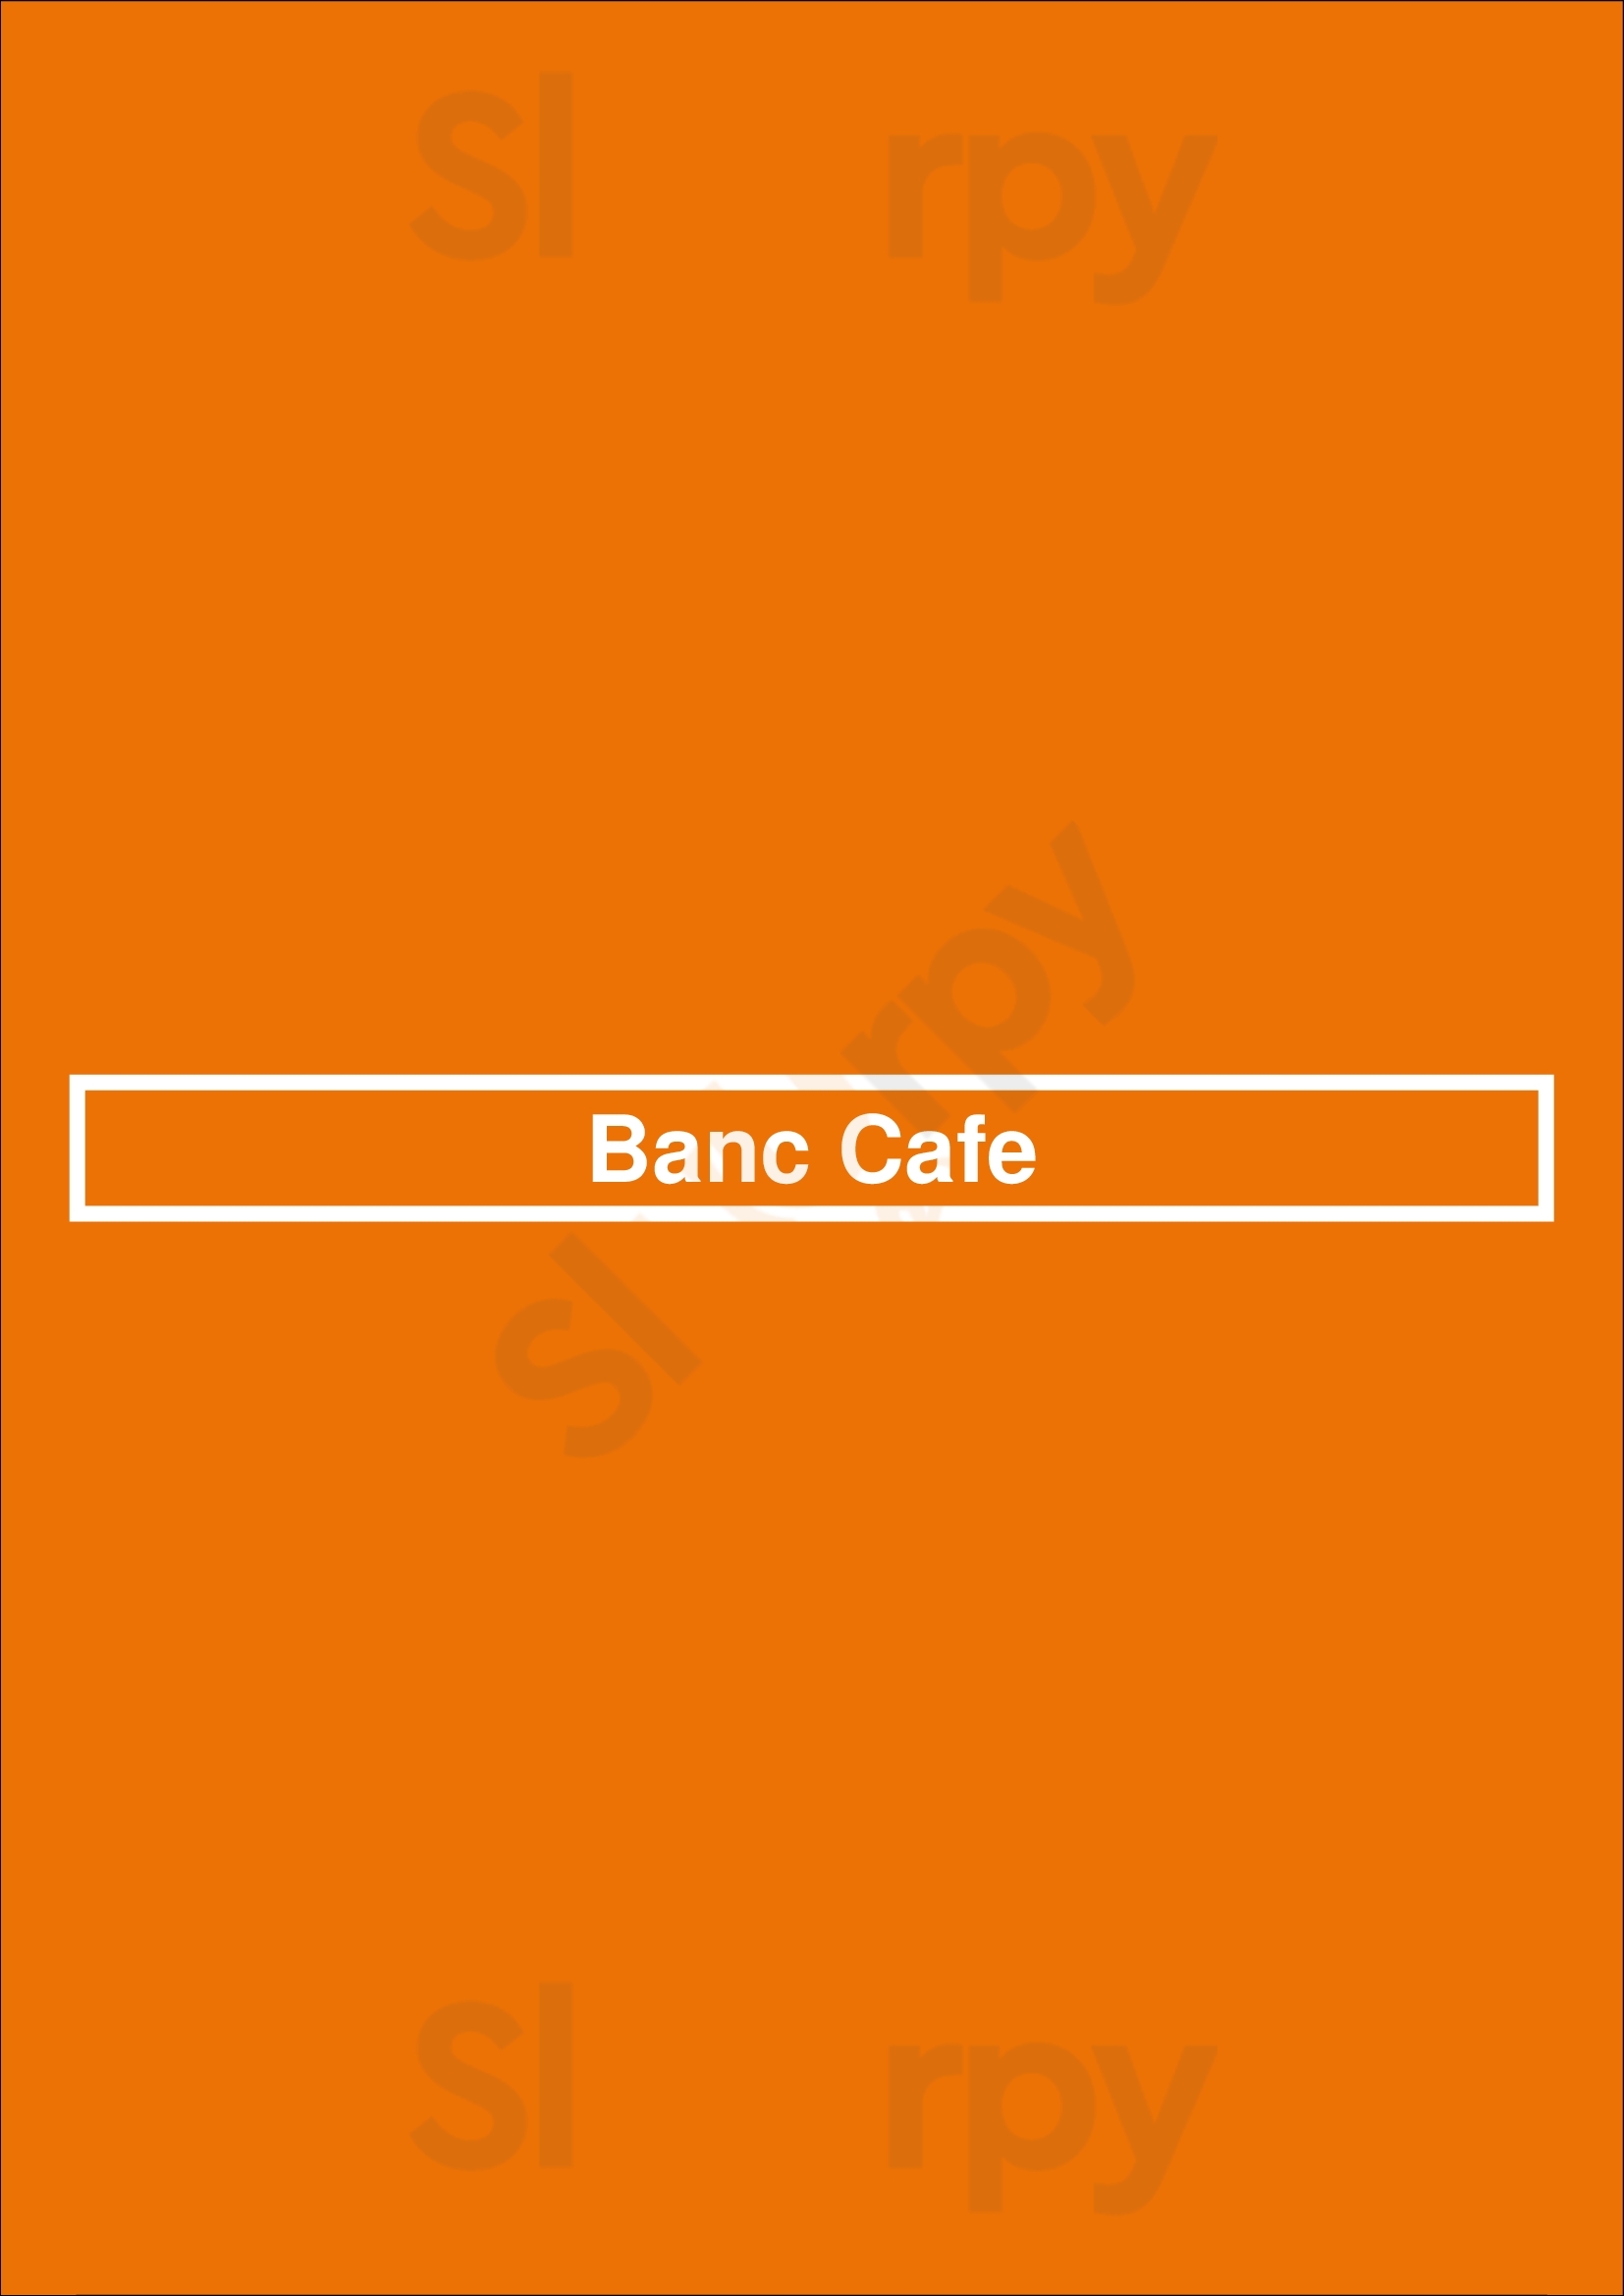 Banc Cafe New York City Menu - 1